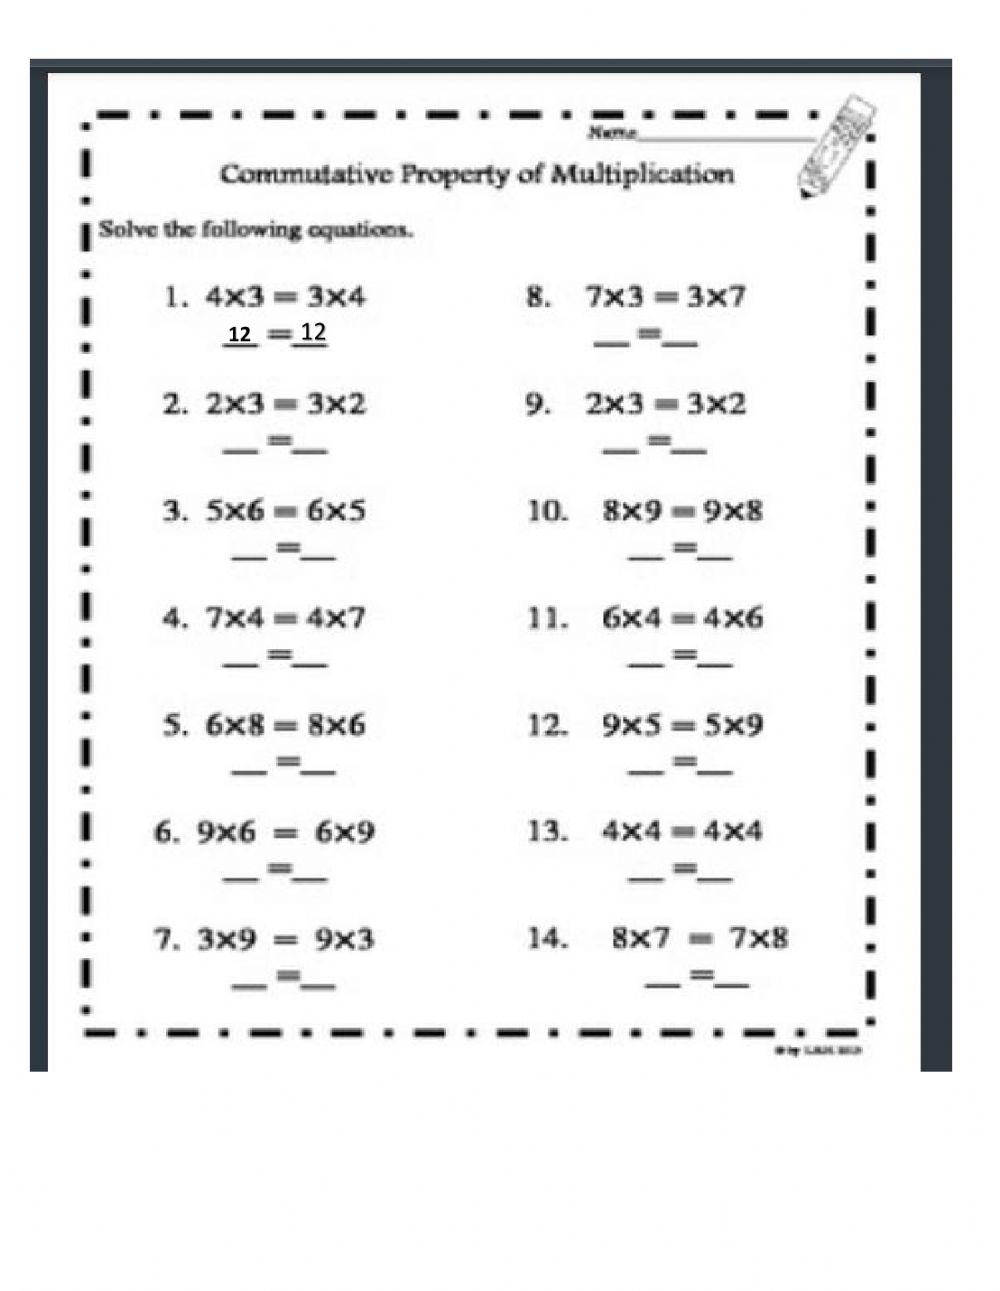 Commutative property